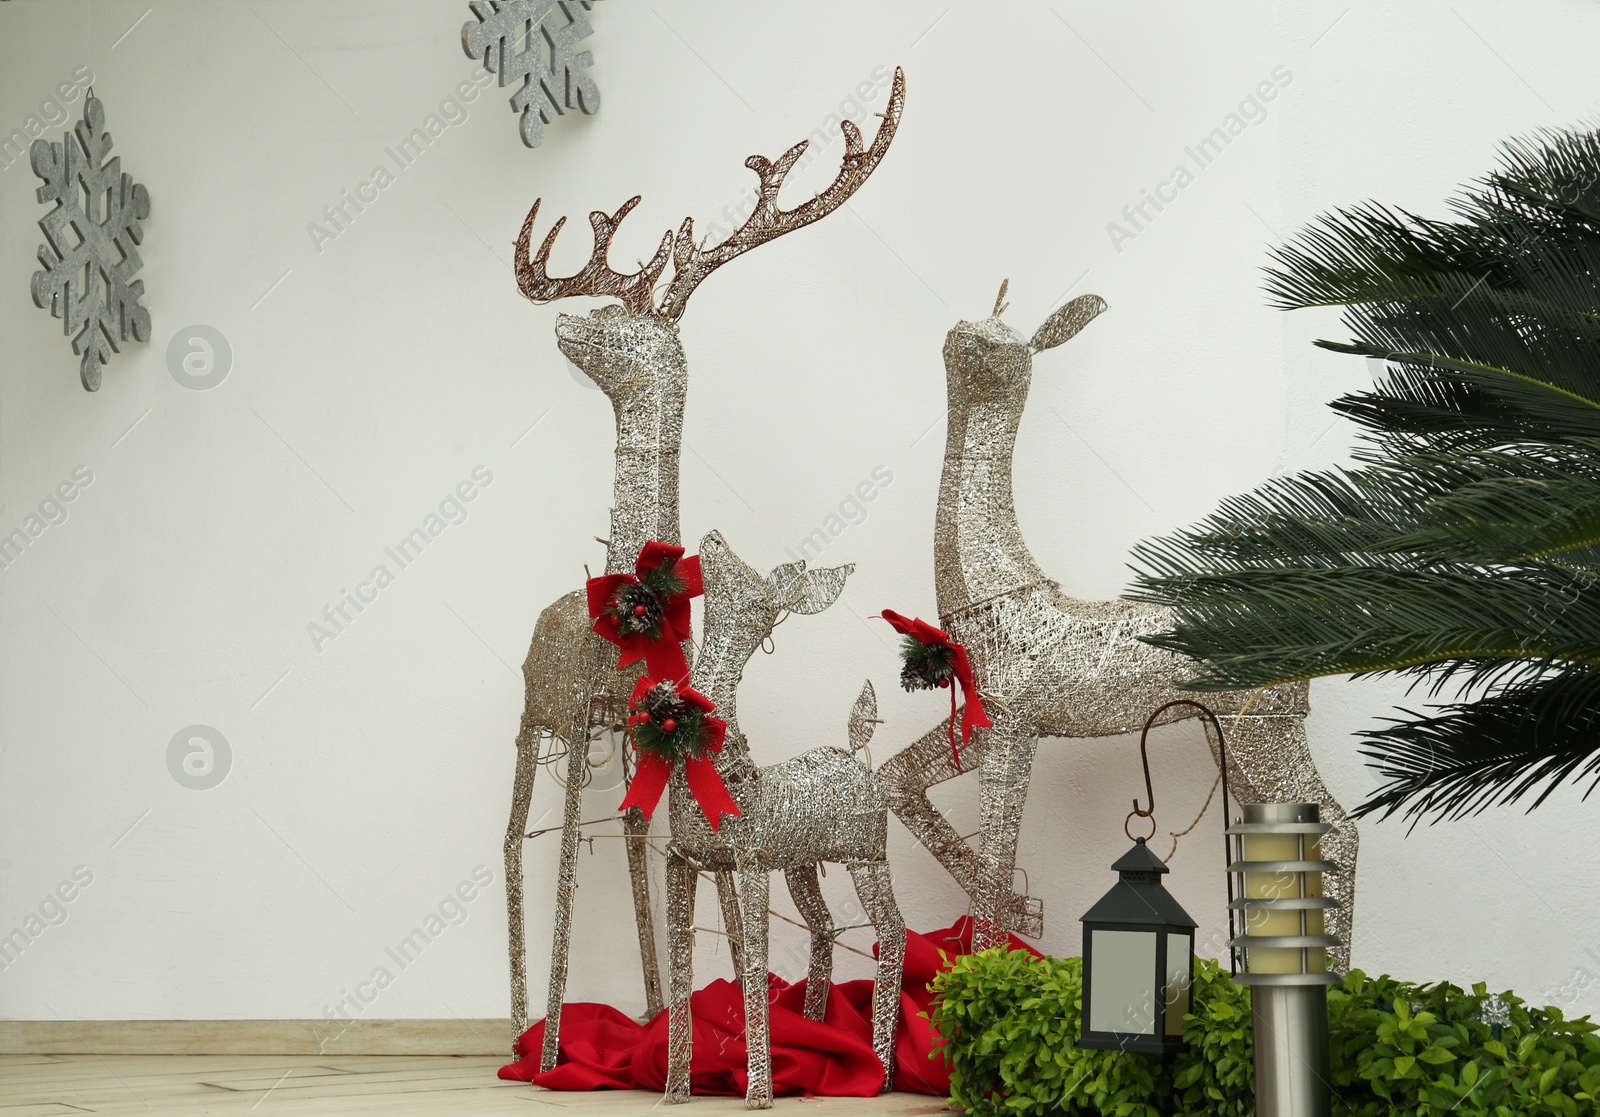 Photo of Beautiful Christmas deers near palm tree outdoors. Festive street decorations